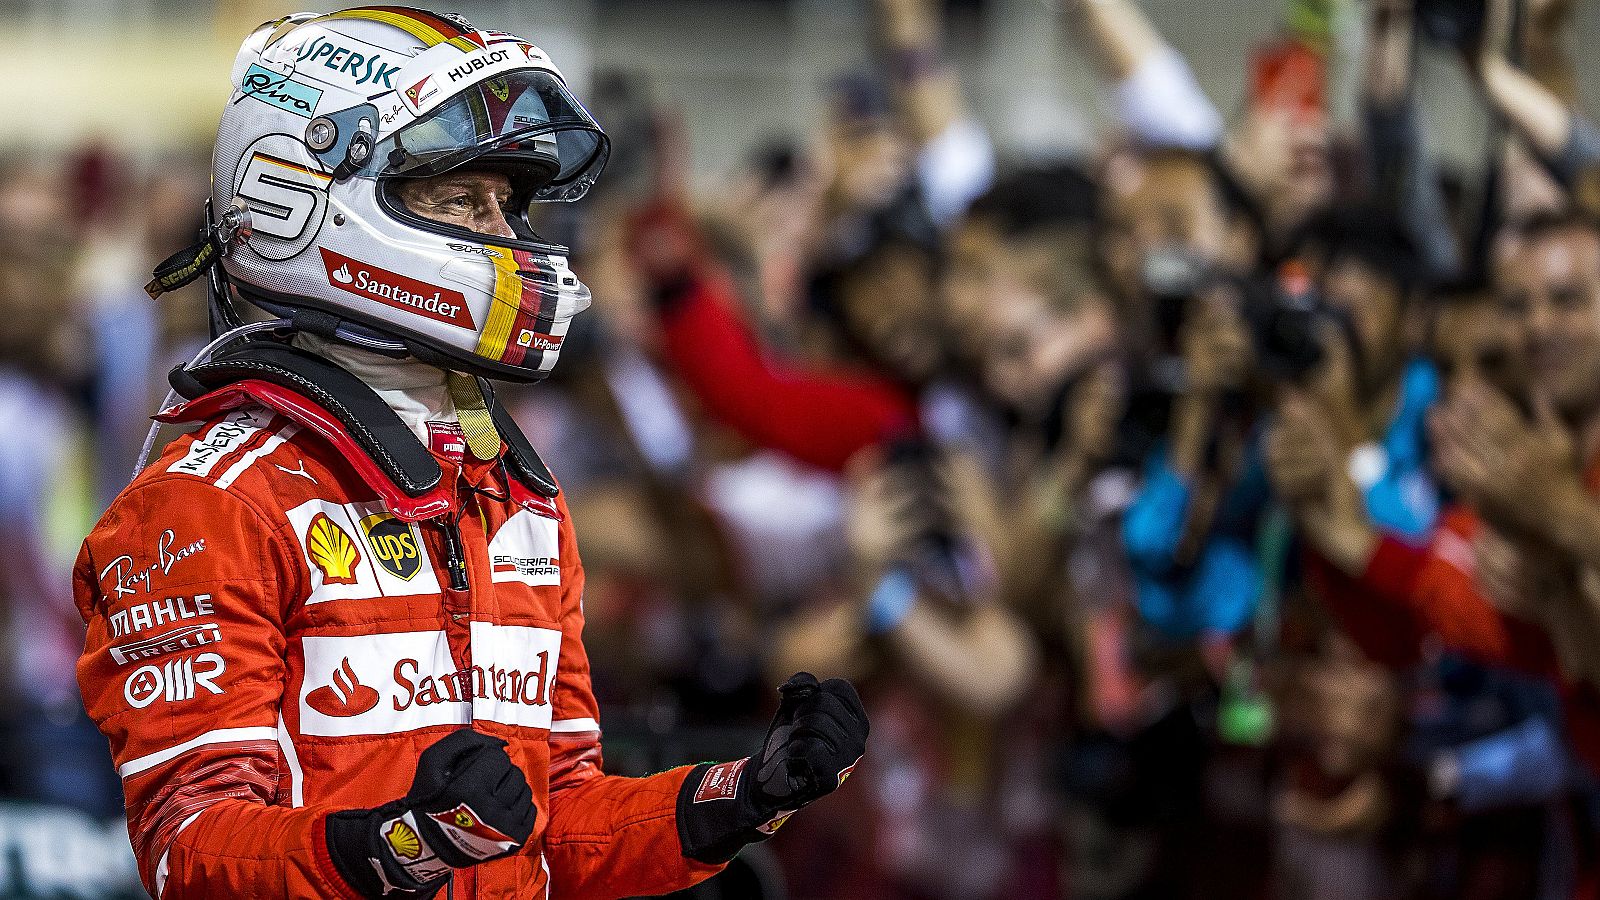 Sebastian Vettel celebra su triunfo en Bahrein.